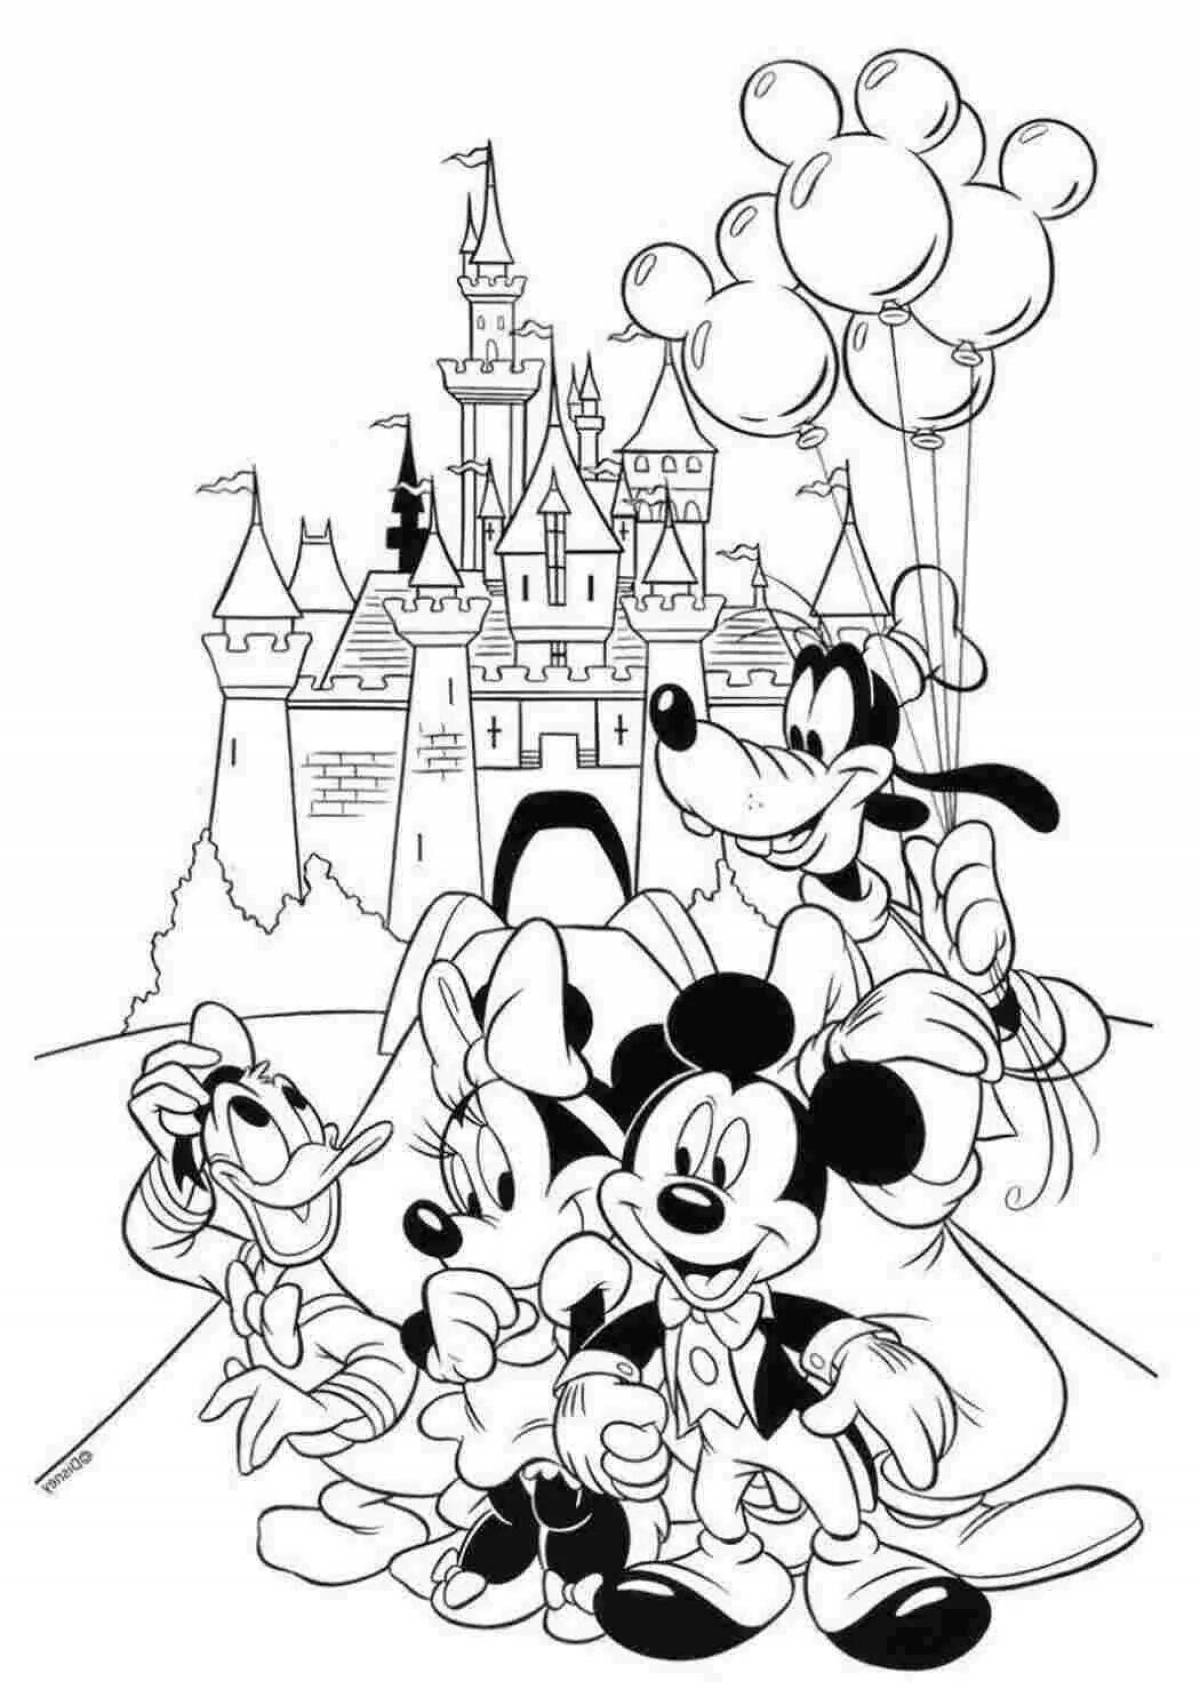 Disney holiday coloring book